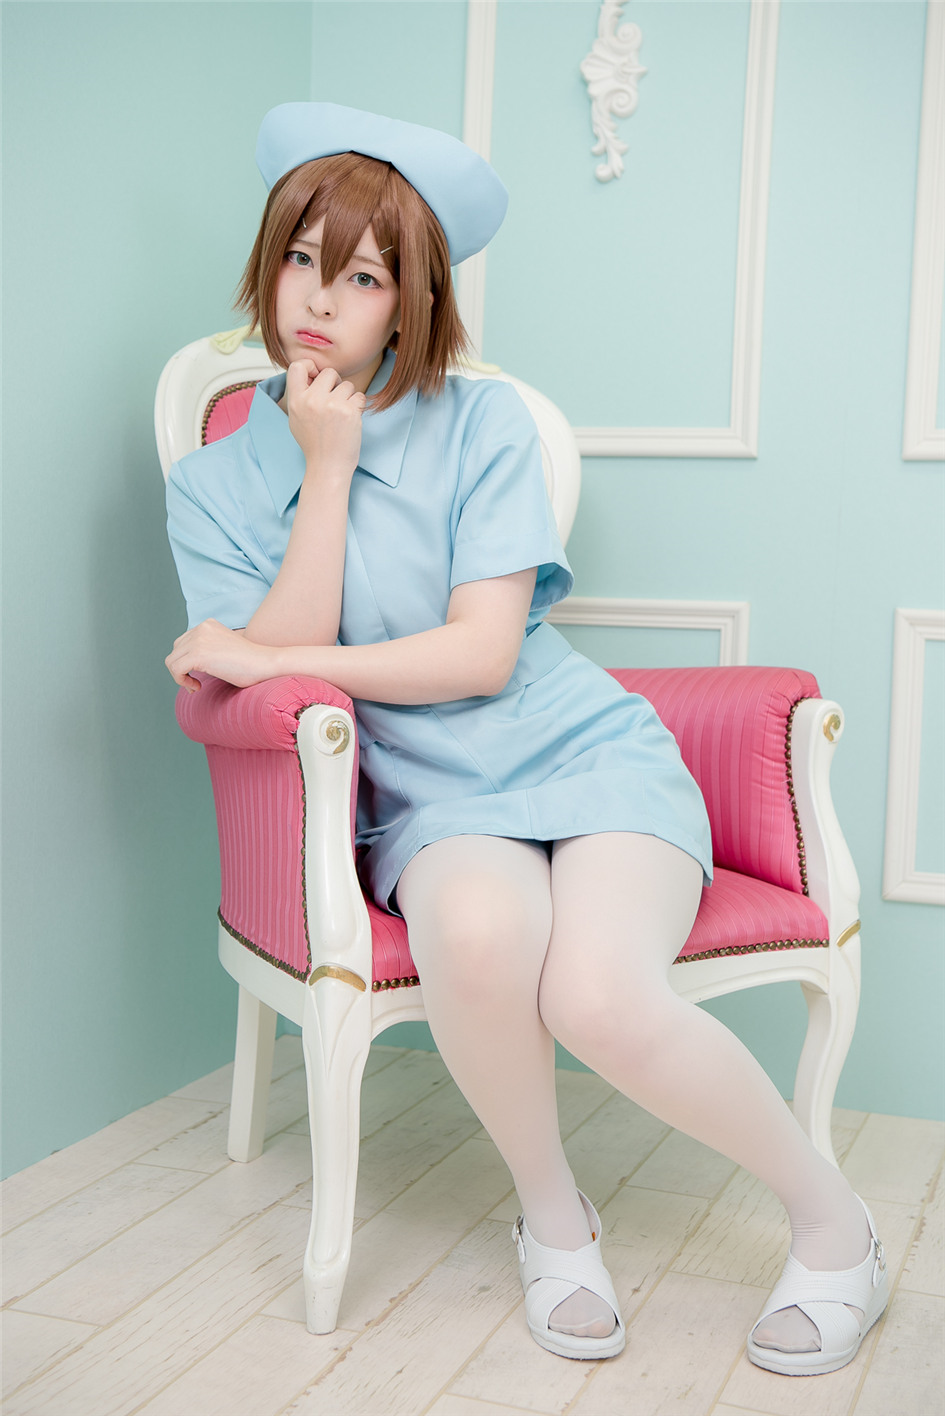 Cosplay写真《美少年部屋》白丝袜护士装图集第1张